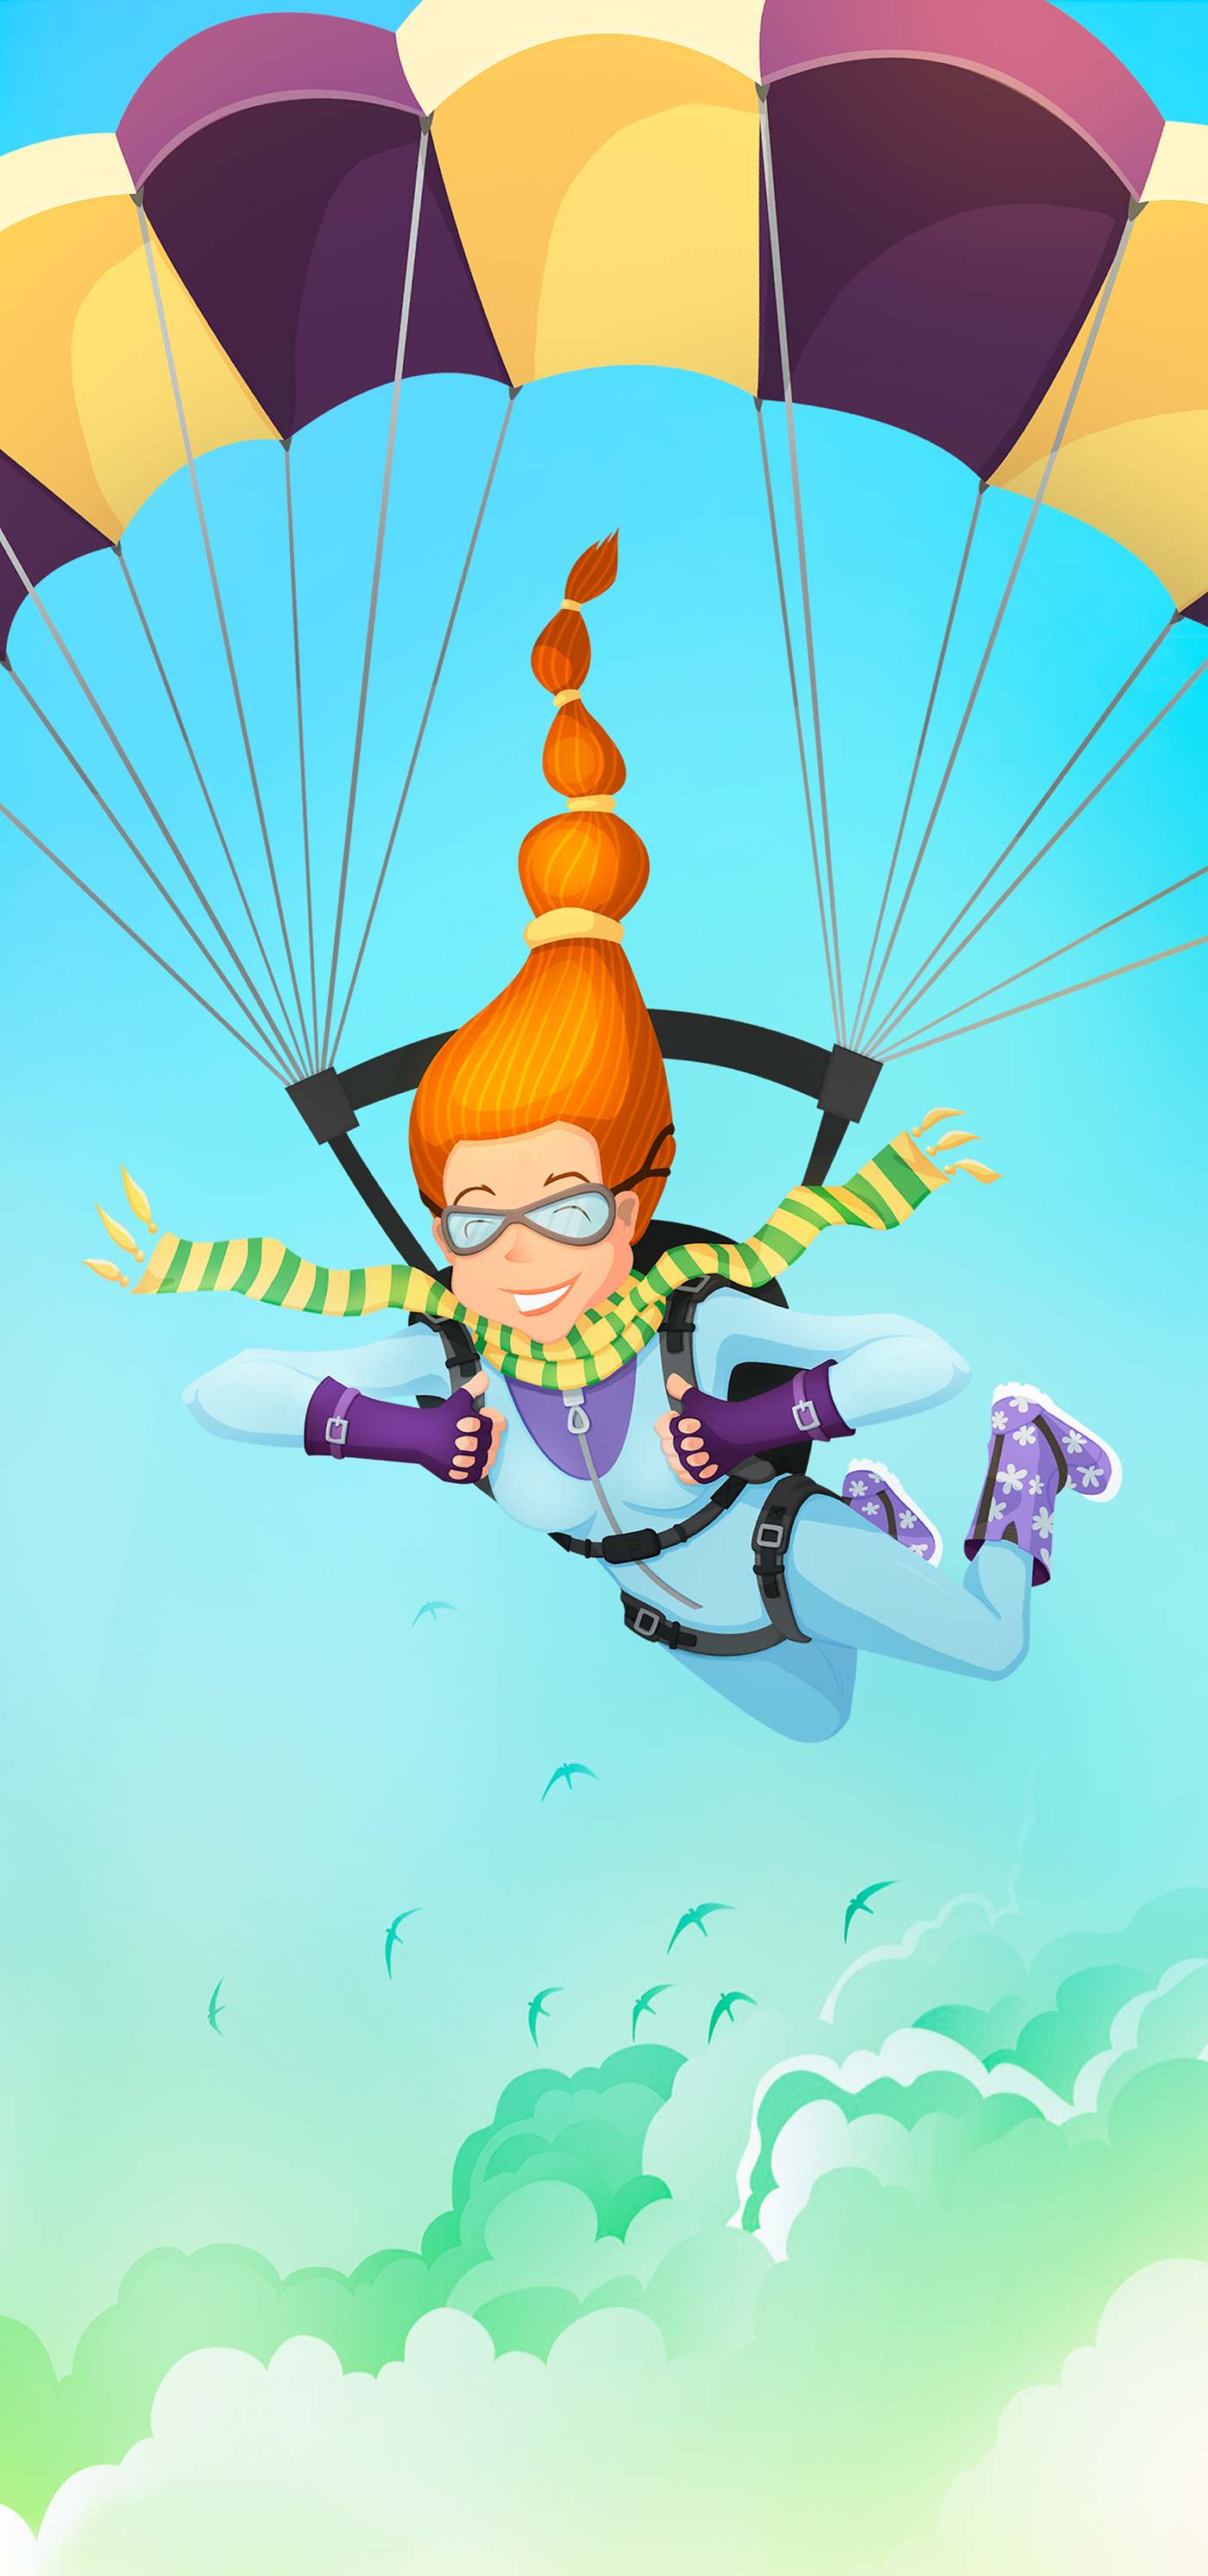 skydiver parashutist parachute jumper